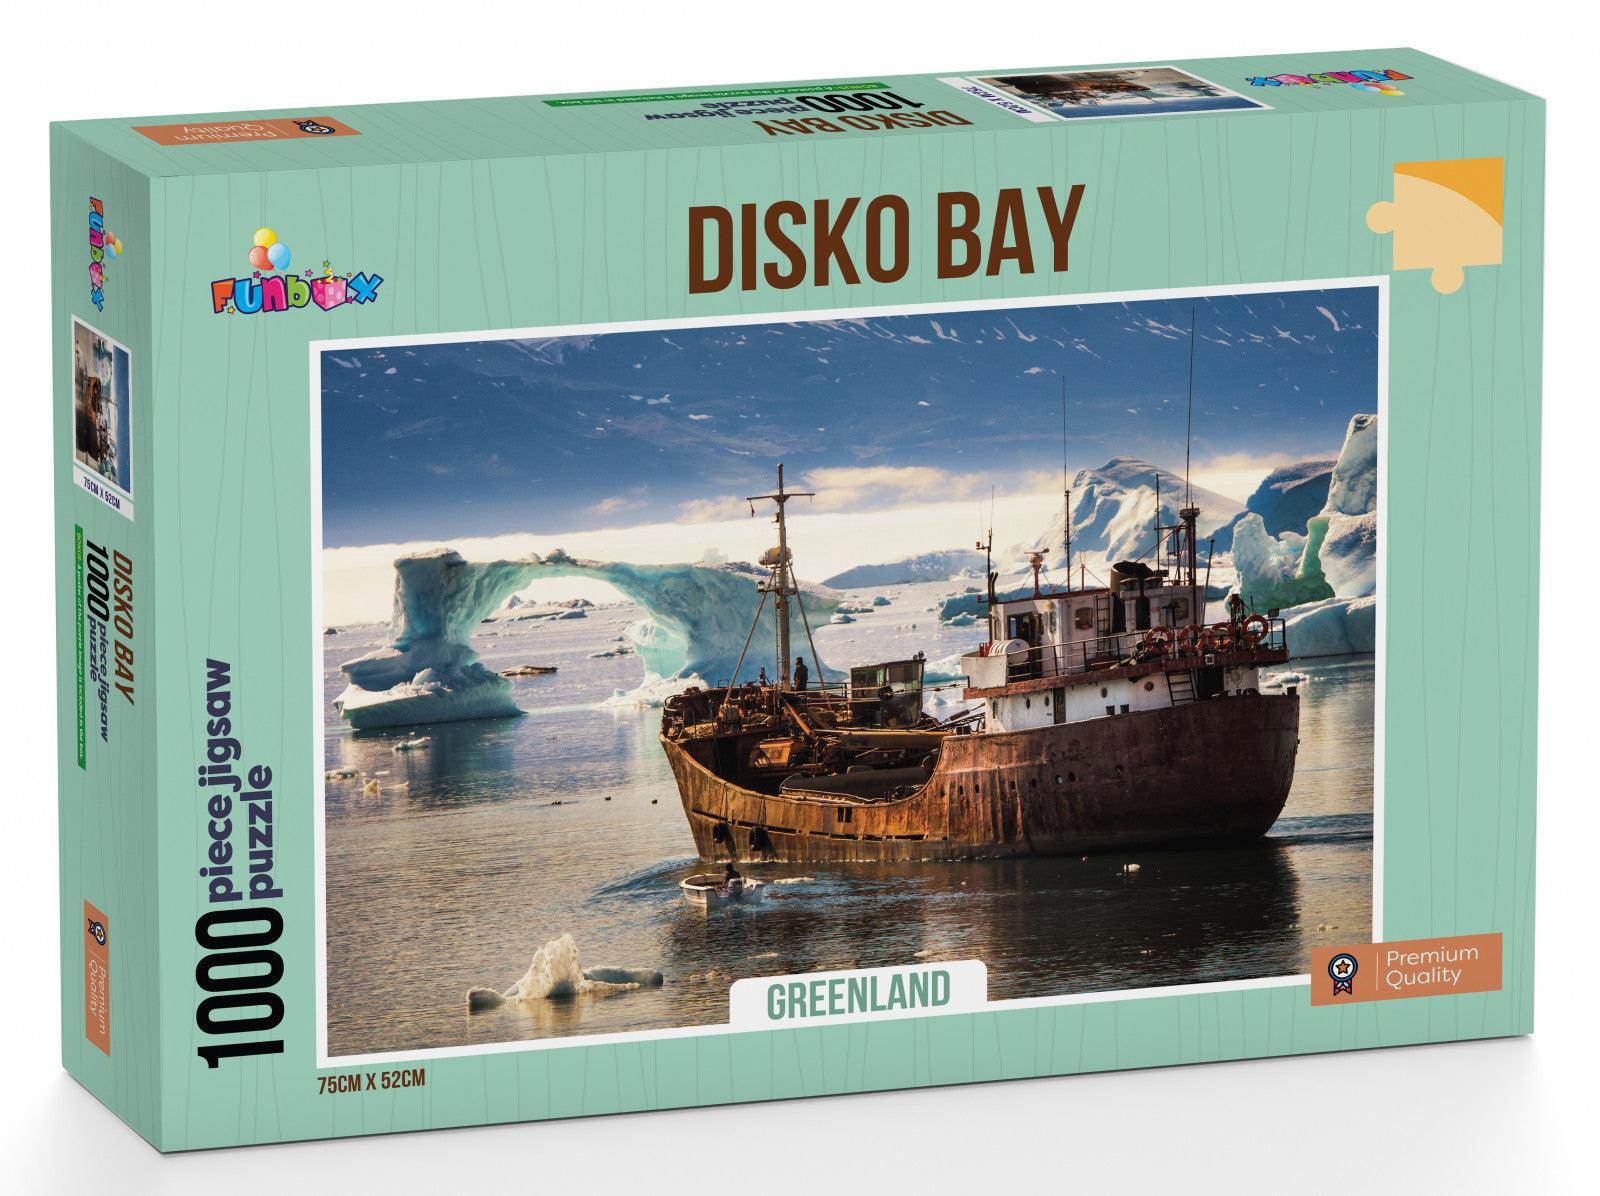 VR-84506 Funbox Puzzle Disko Bay Greenland Puzzle 1,000 pieces - Funbox - Titan Pop Culture